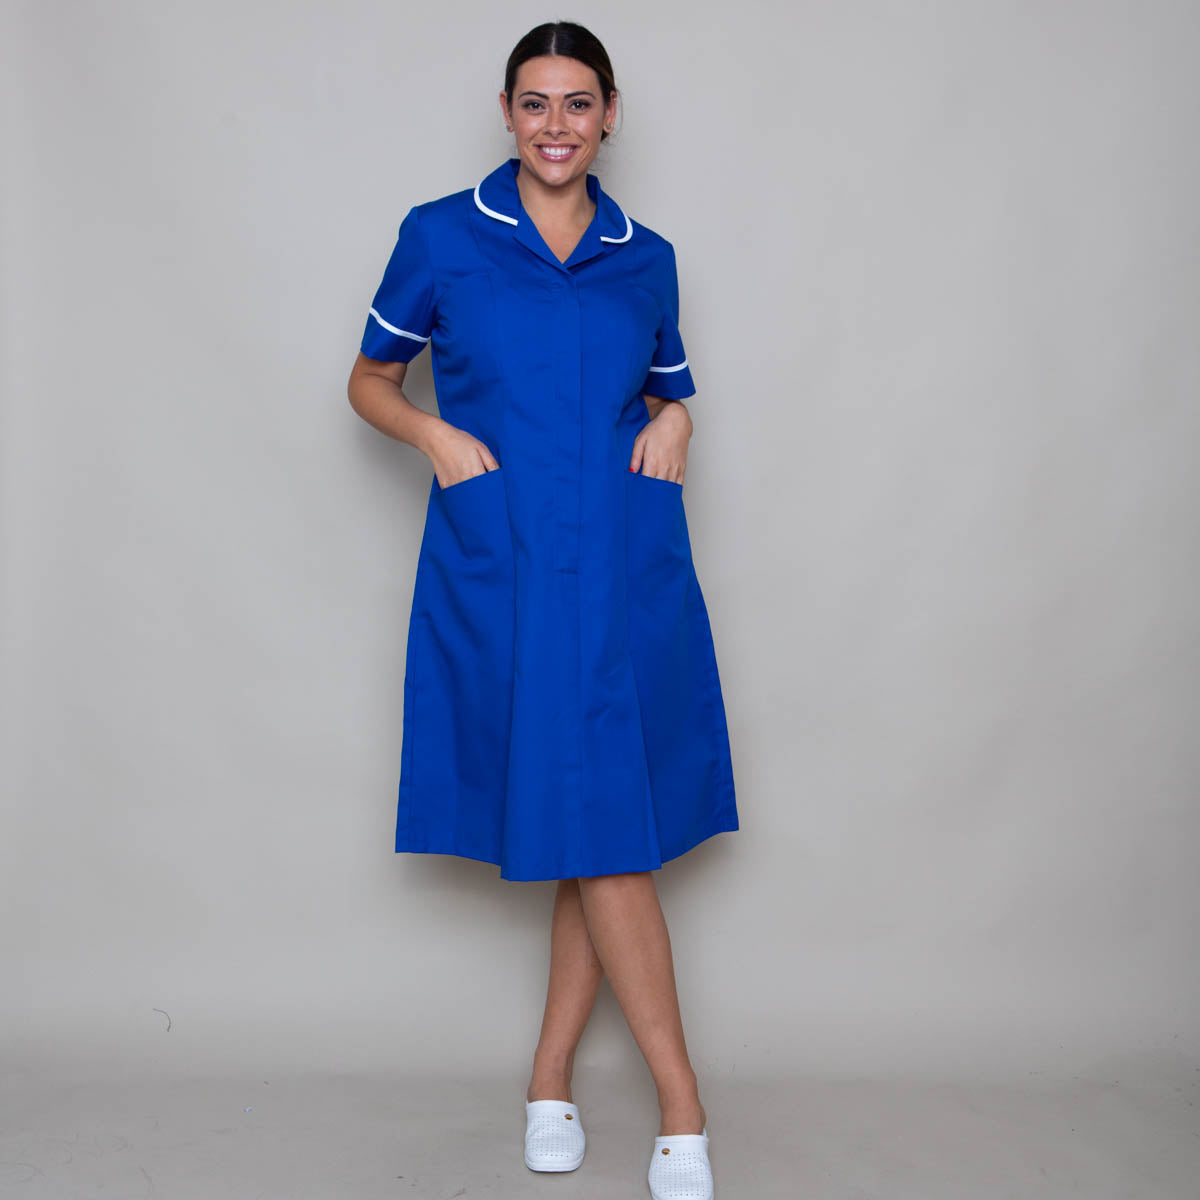 Nurses Dresses, Nursing Uniforms